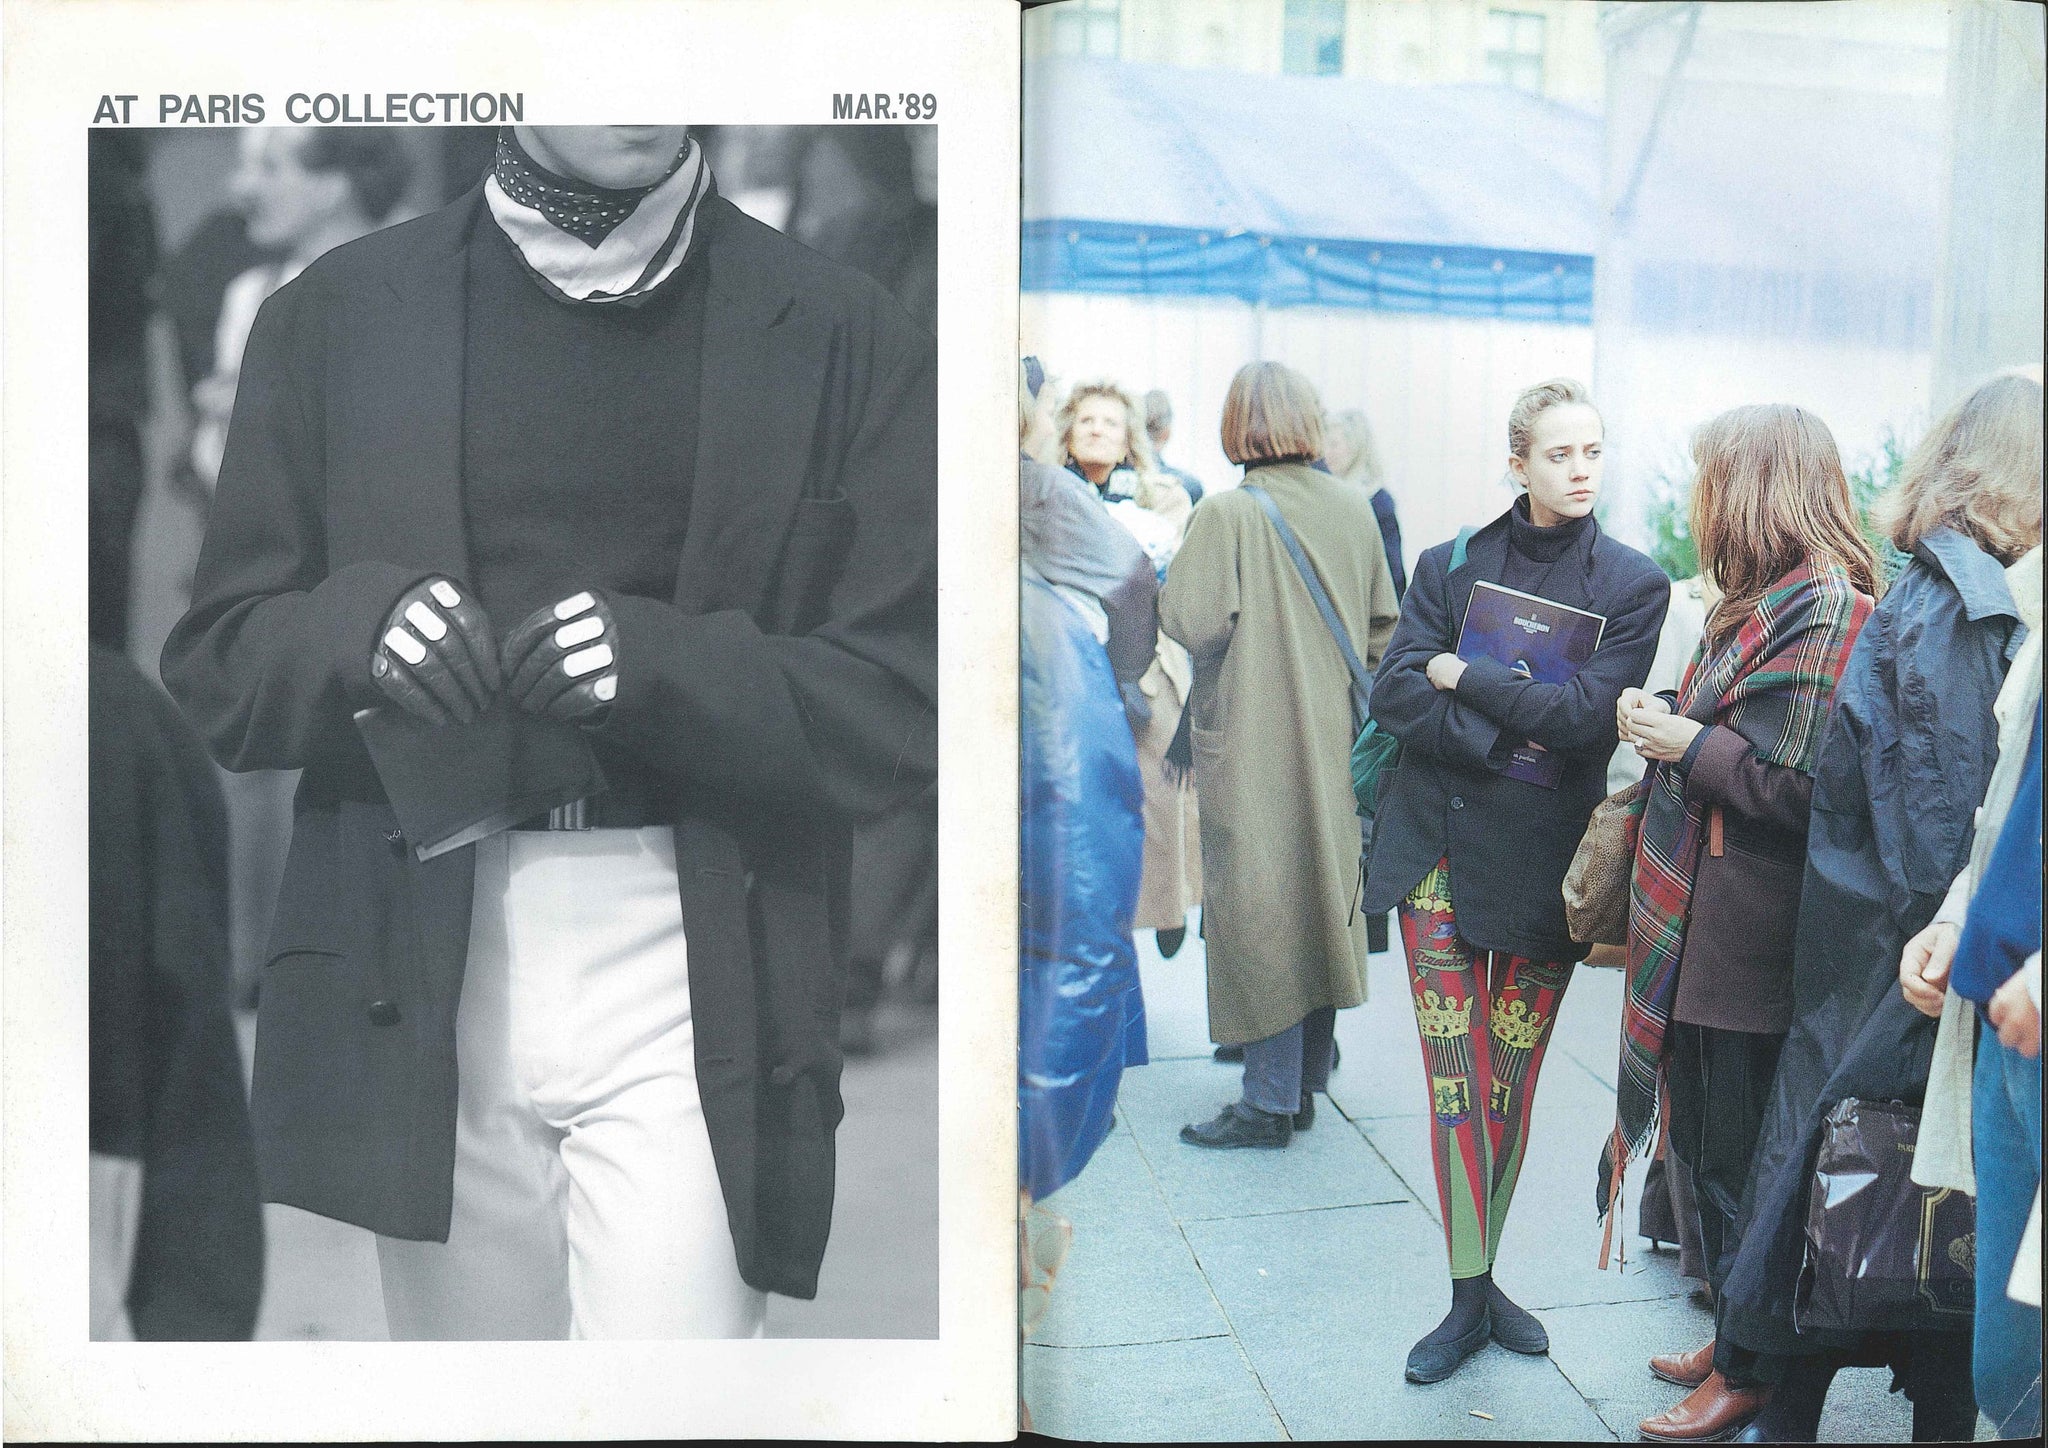 STREET magazine no. 25 / january 1990 / paris collections / Shoichi Aoki